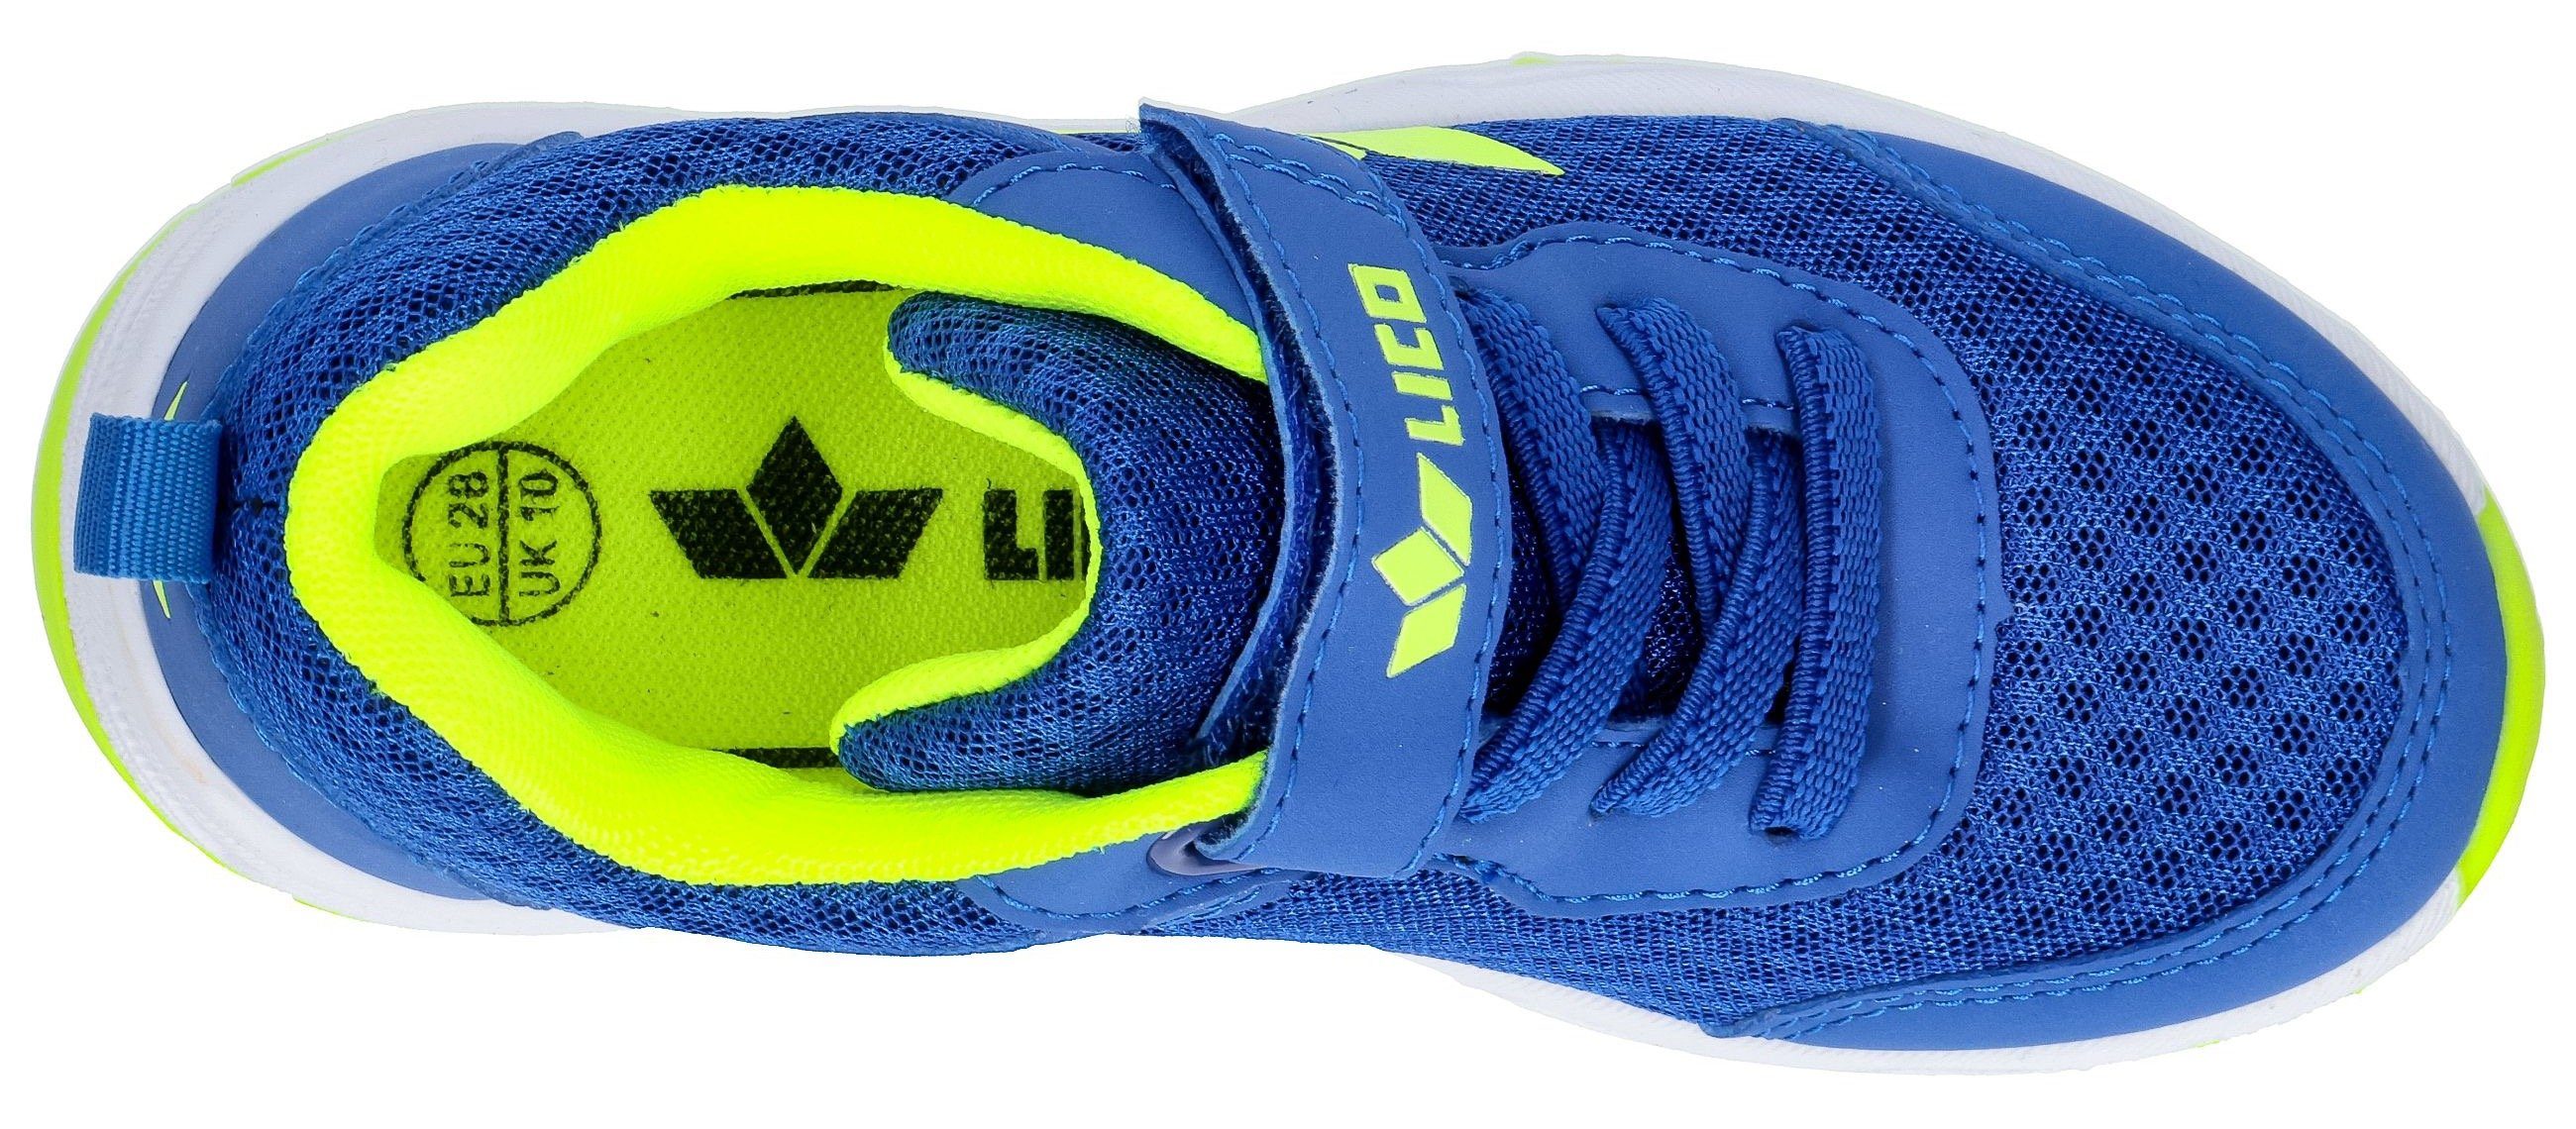 Lico Mika VS WMS Sneaker mit Wechselfußbett blau/lemon